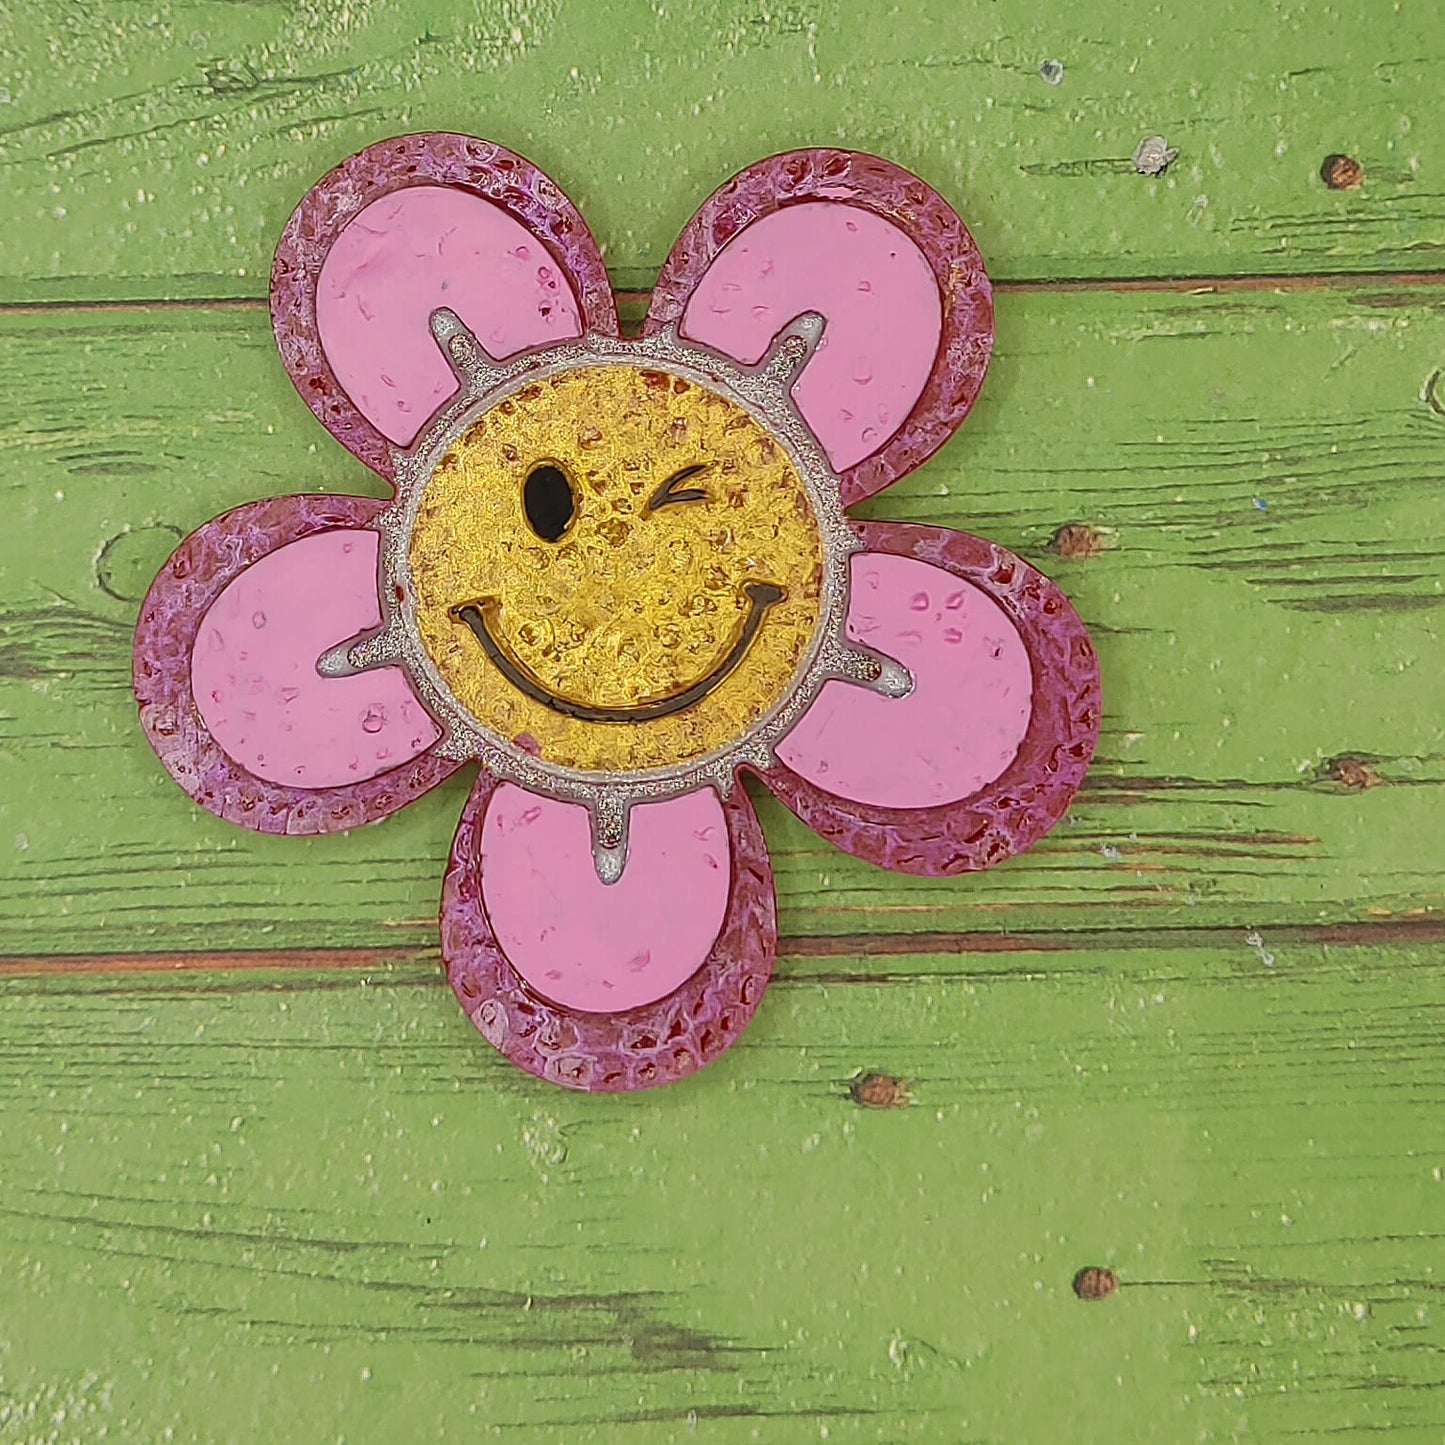 Winky Face Emoji Flower - Silicone freshie mold